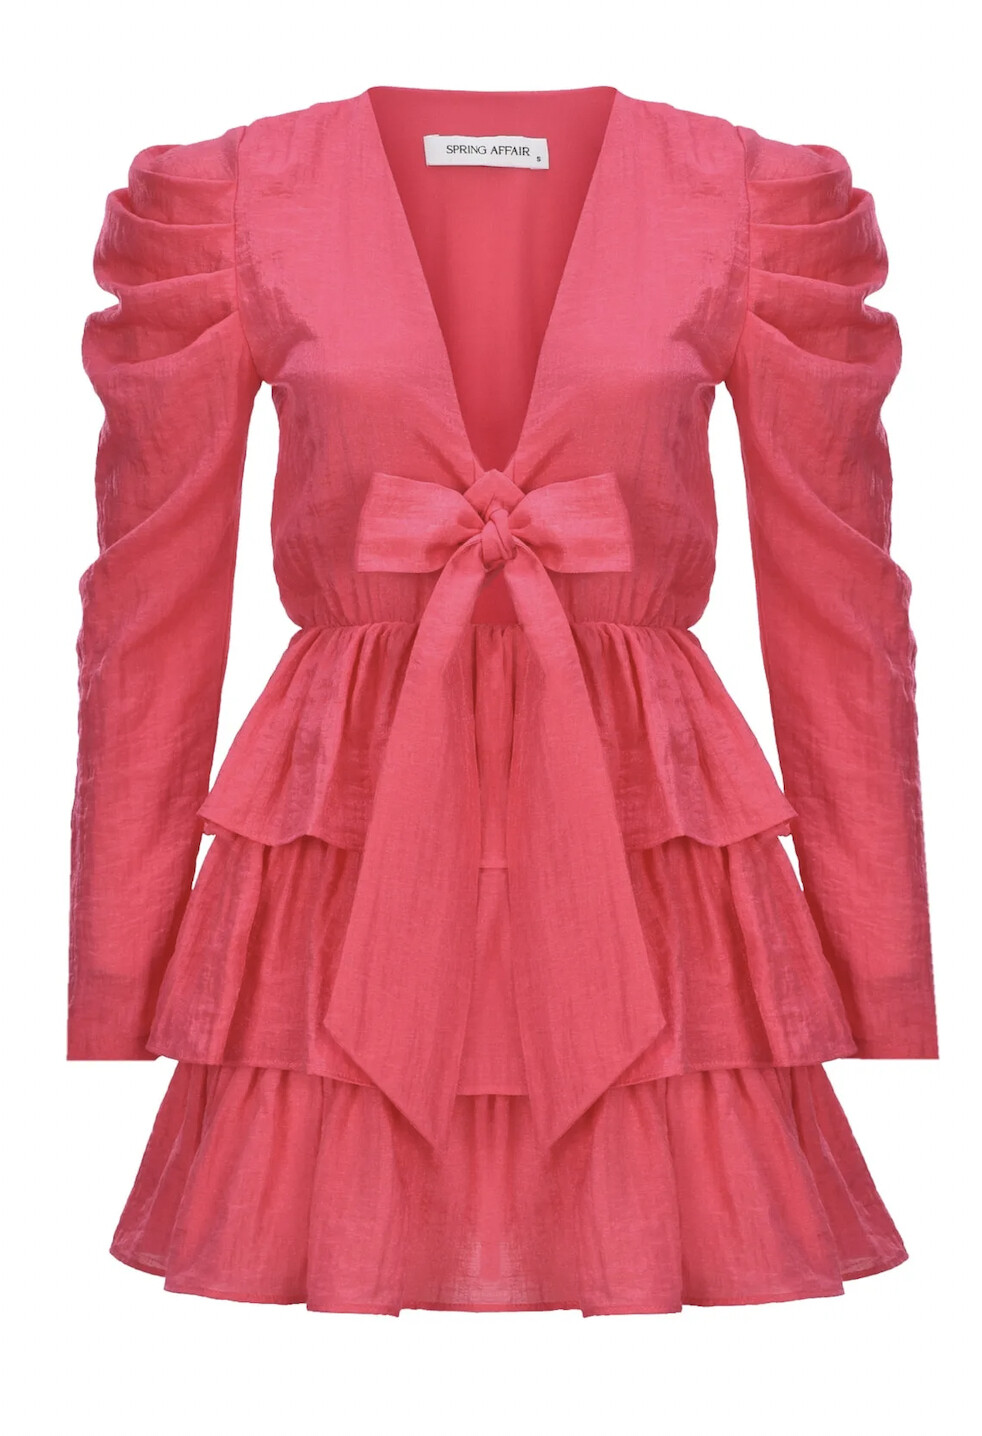 AURORA Bow Detailed Pink Mini Dress